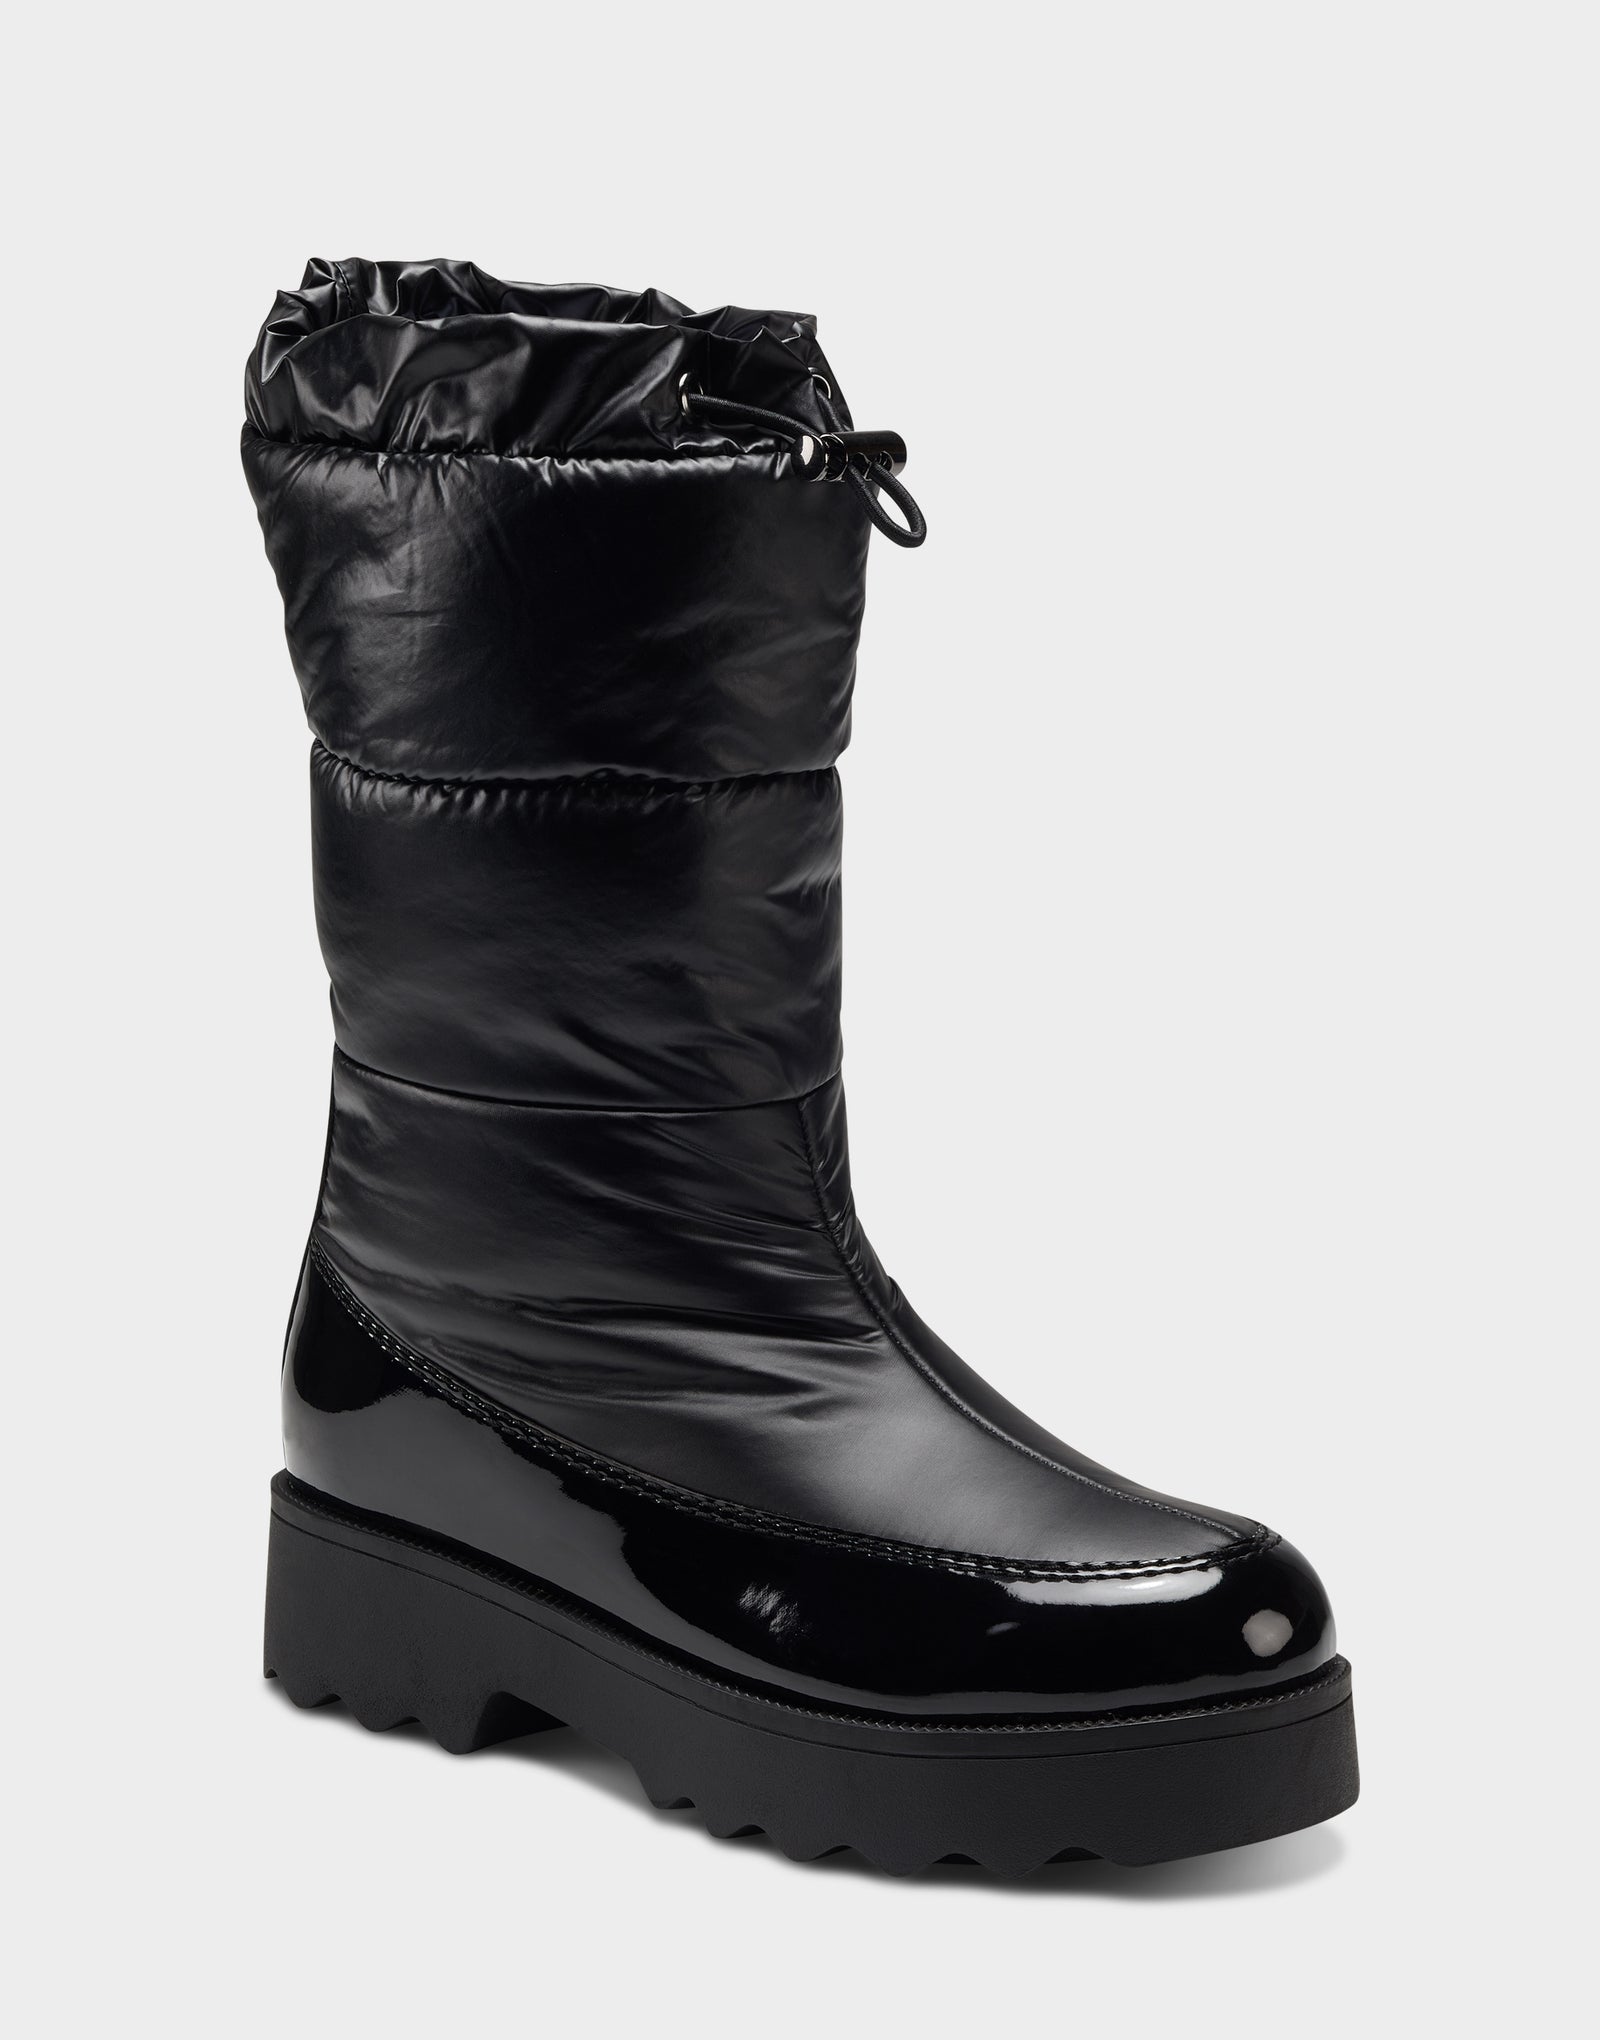 Girls Boot in Black